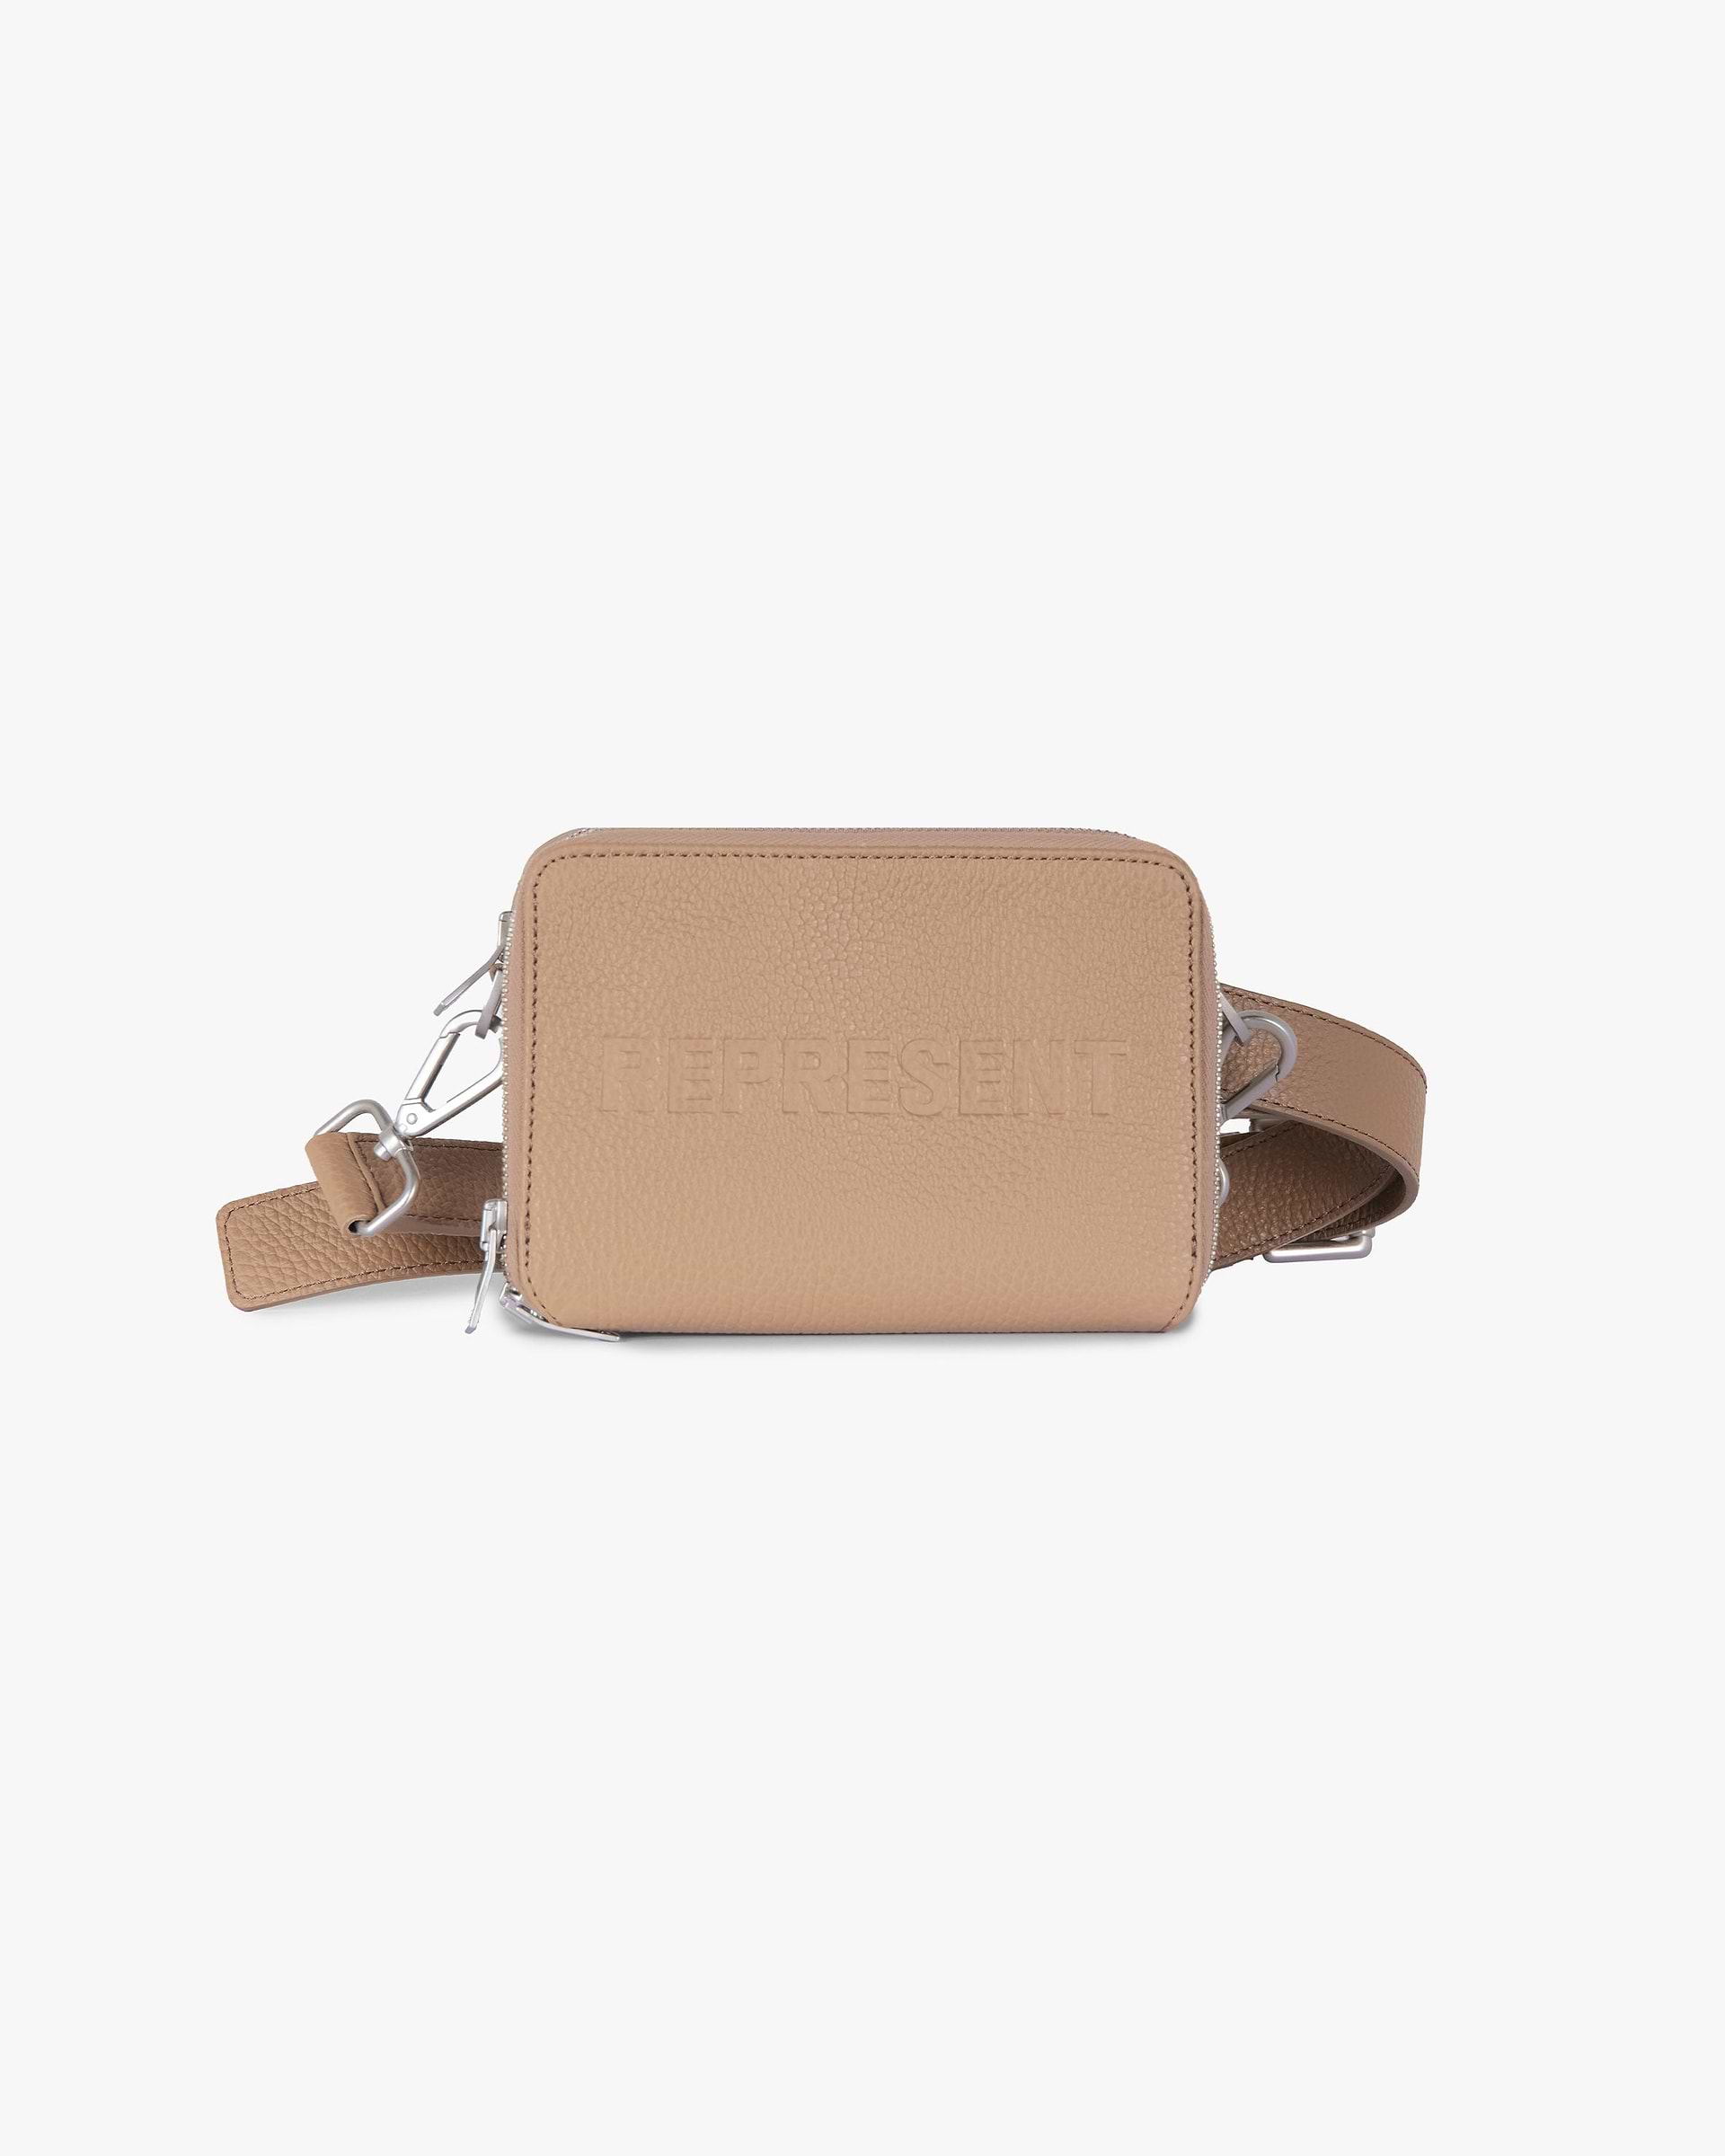 Leather Camera Bag | Sesame Accessories SC23 | Represent Clo